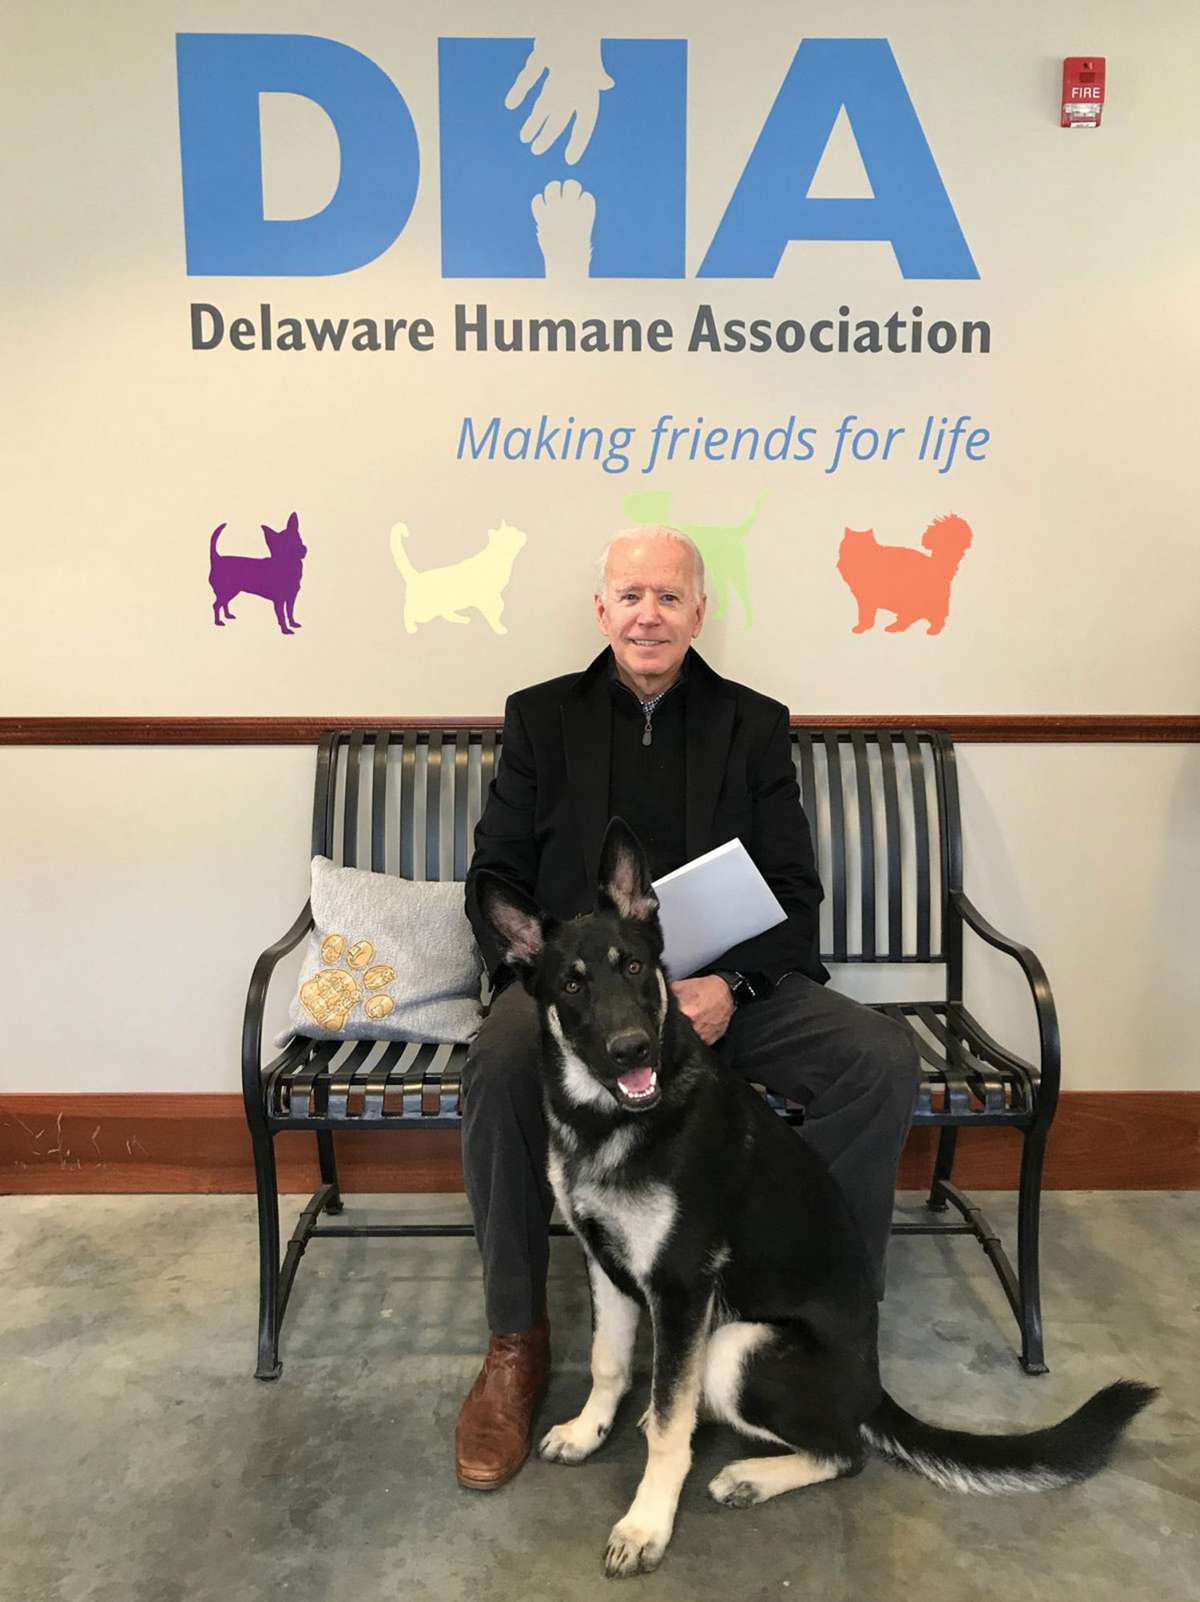 President Joe Biden and dog, Major Biden on his adoption day in 2018 from Delaware Humane Association